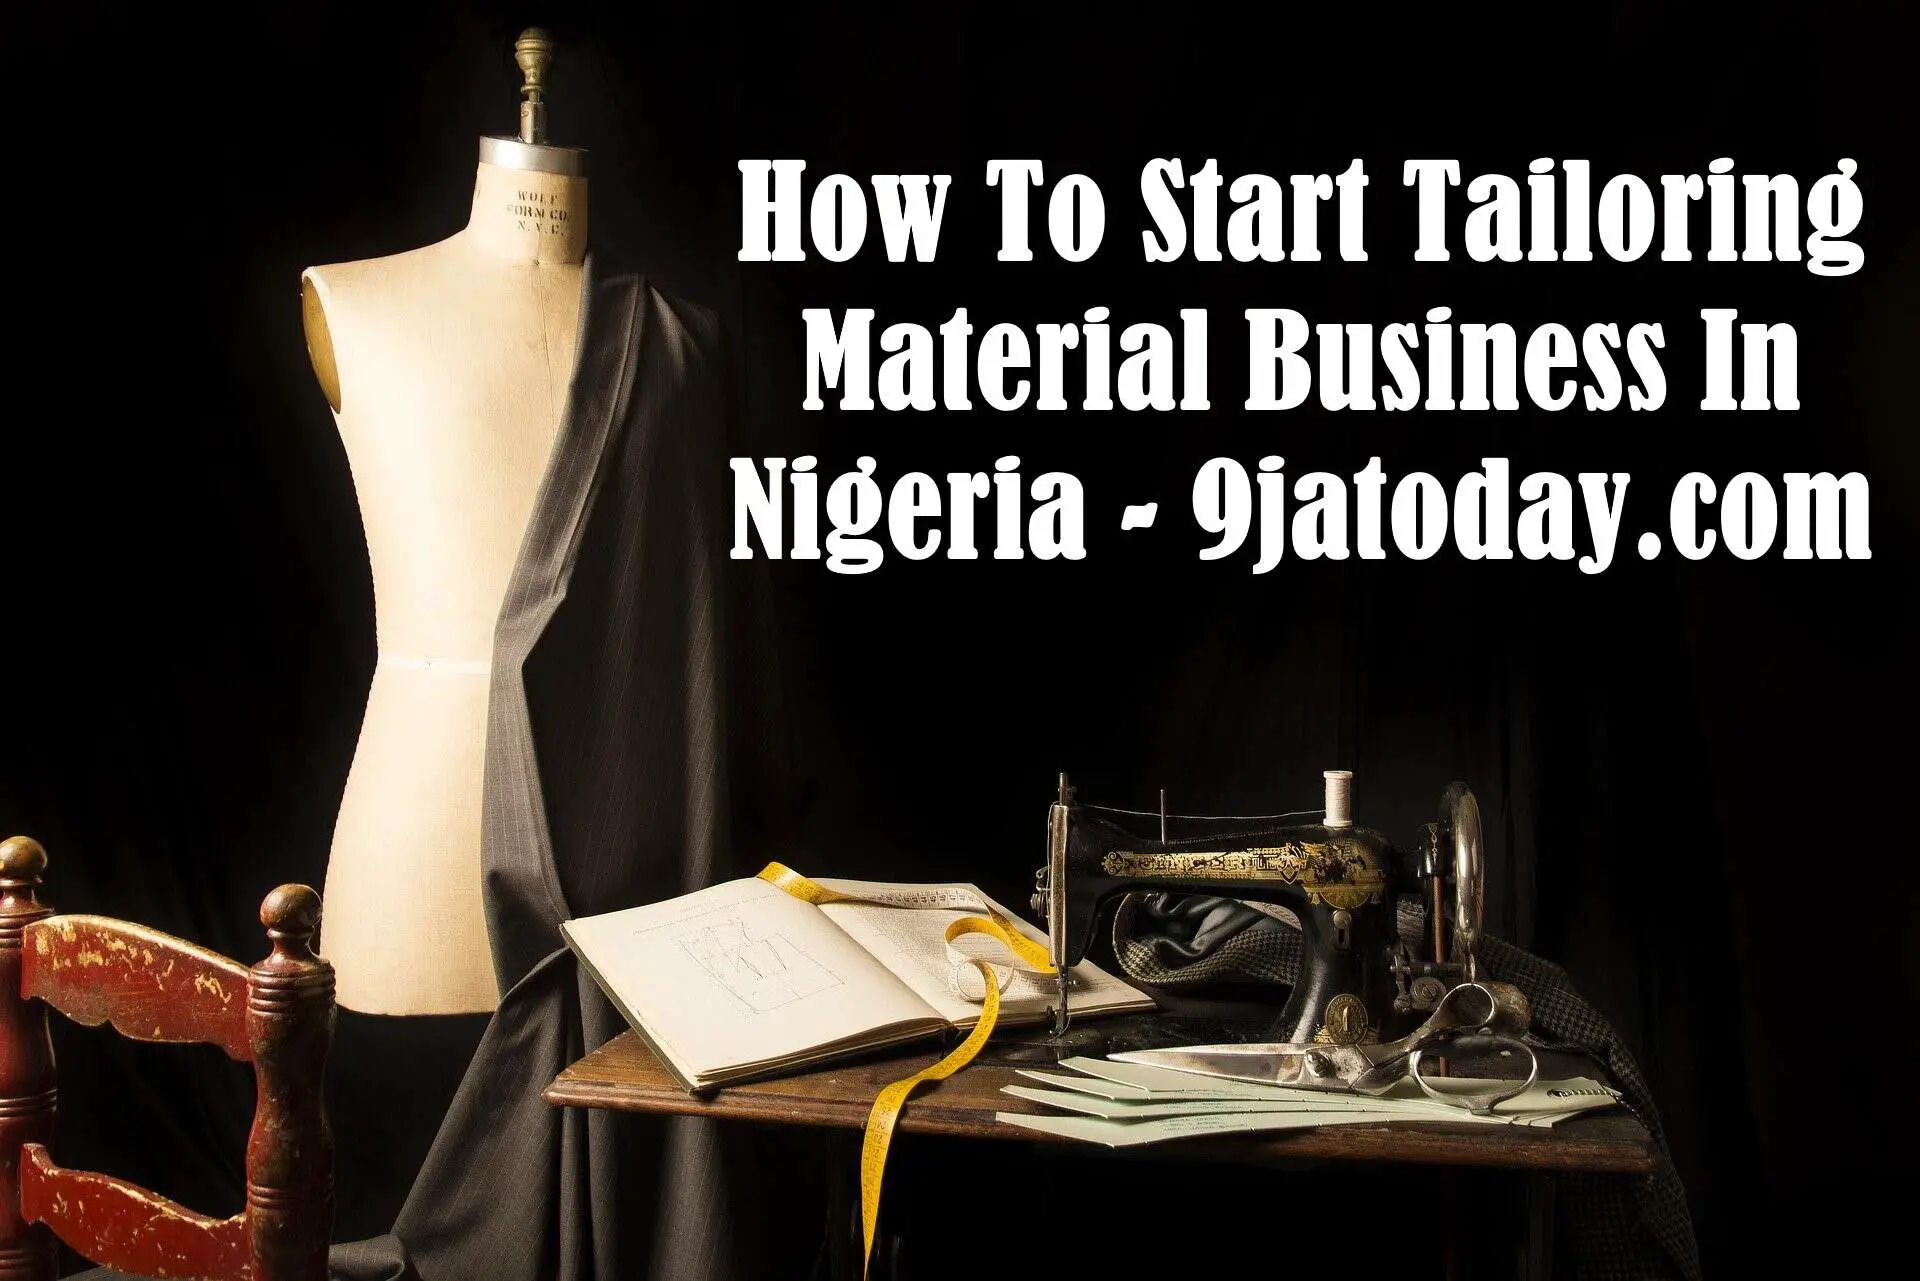 Start Tailoring Material Business